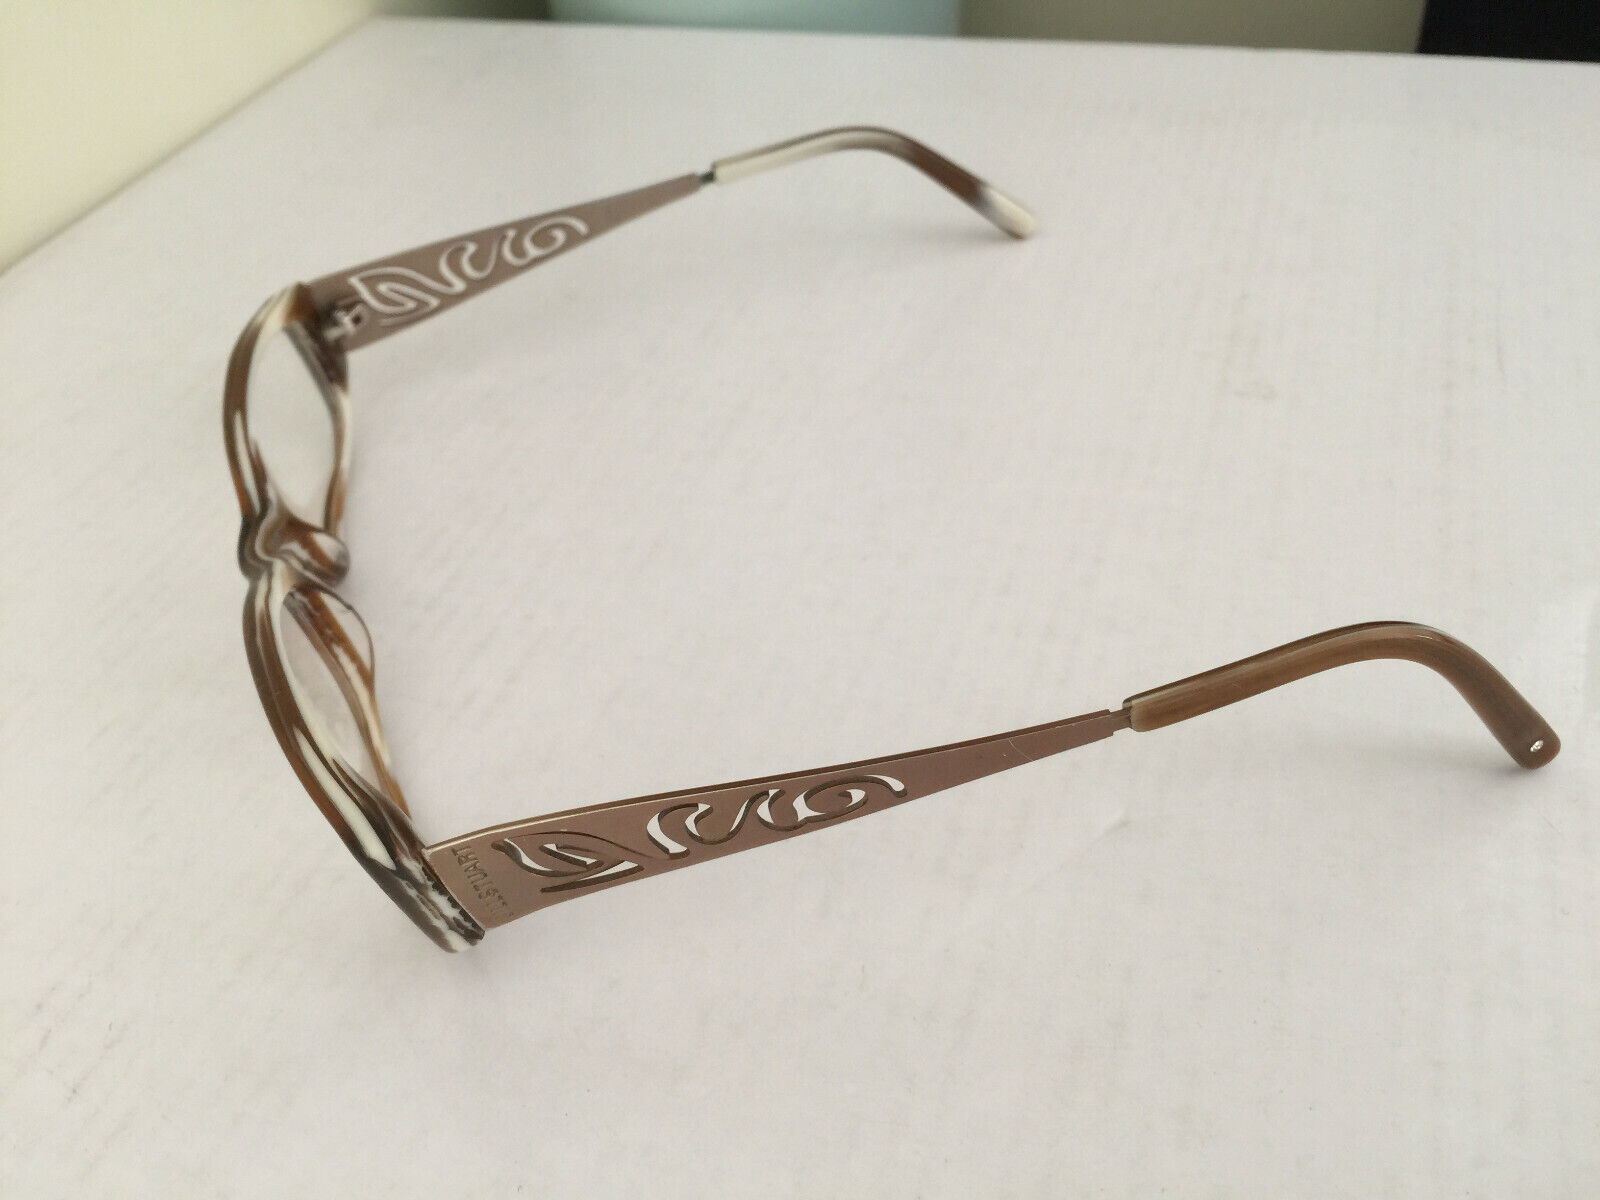 Jill Stuart Eyeglasses Frame Brown/Rose Gold Tone Size 54[]16 135